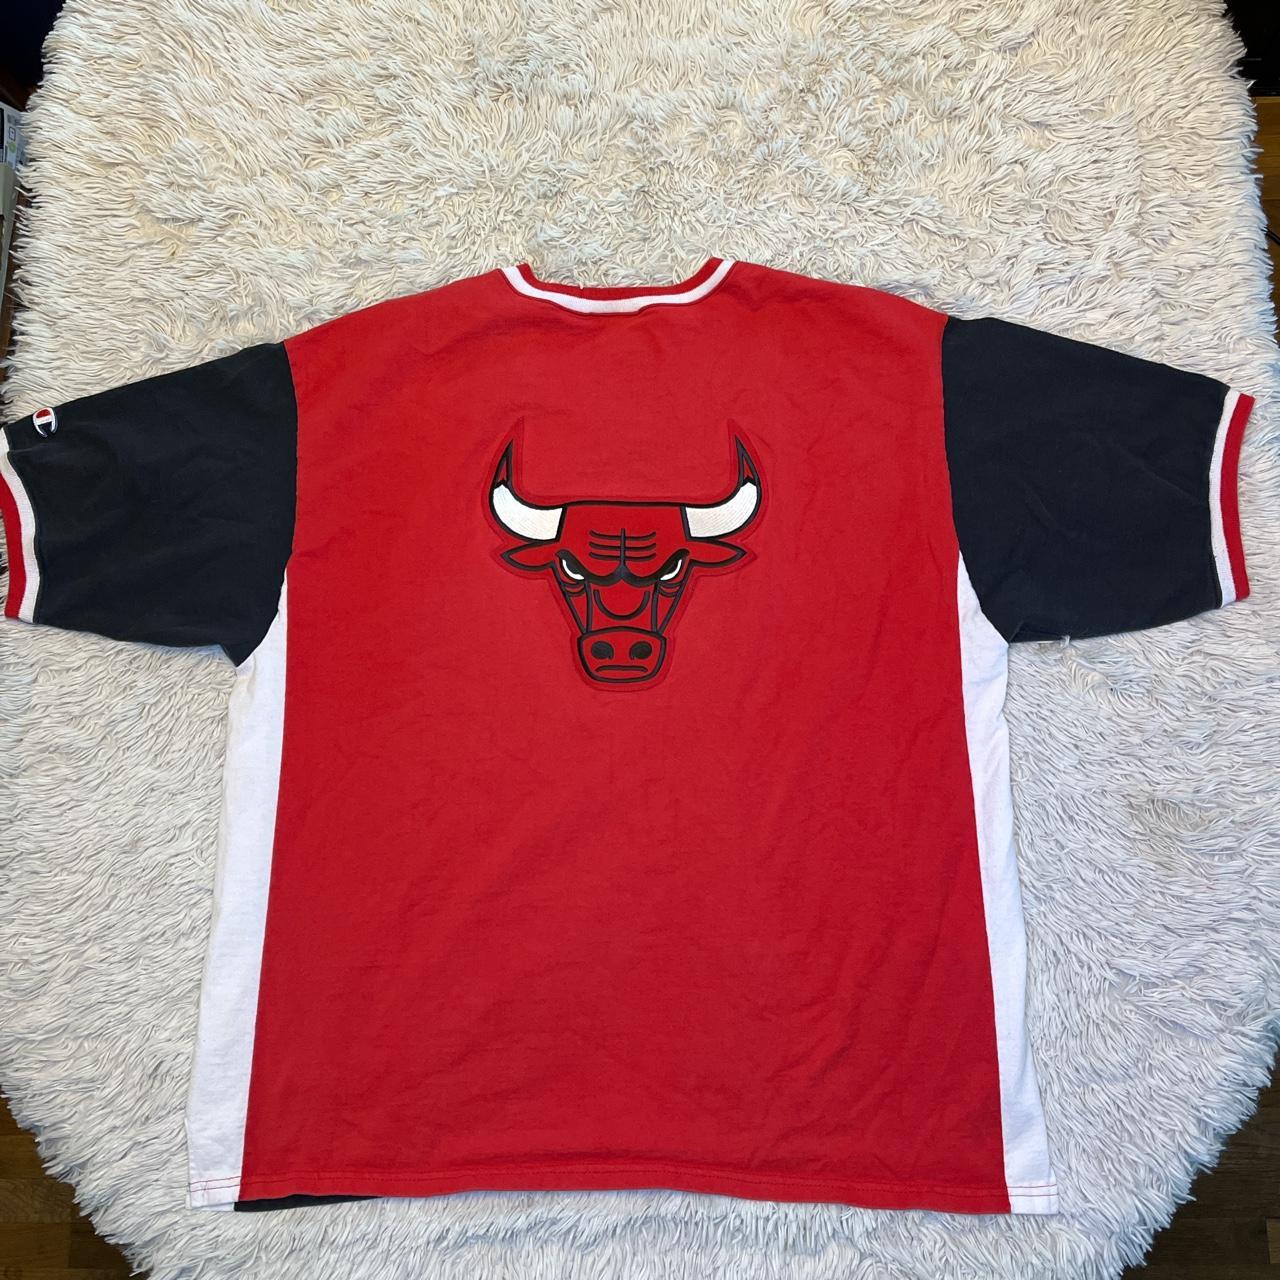 Vintage 90s Chicago Bulls Warm Up Shooting Shirt - L